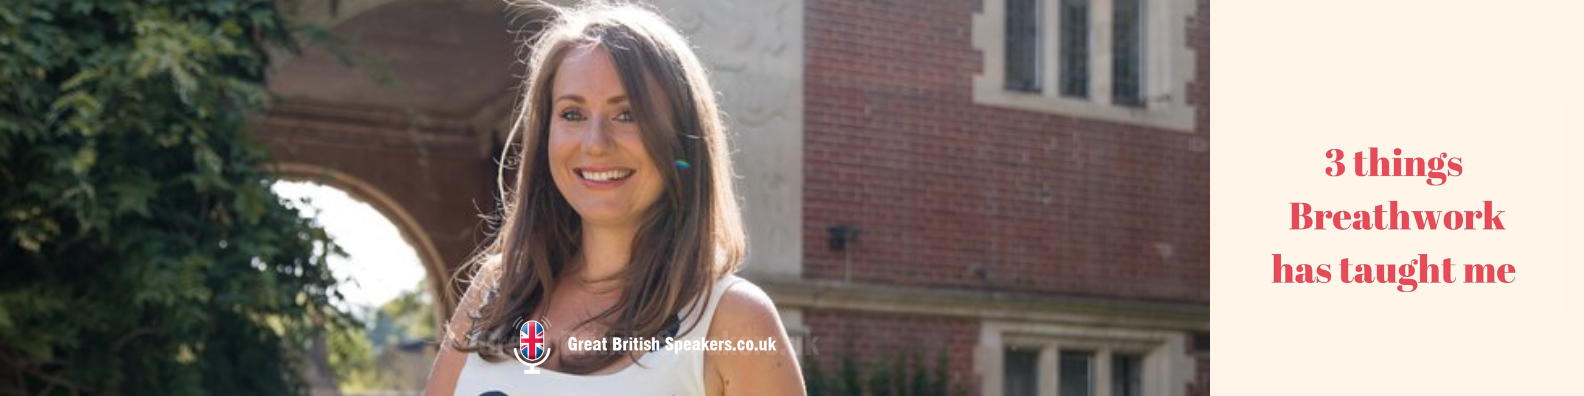 Sophie Belle mental health speaker wellness breathwork coach